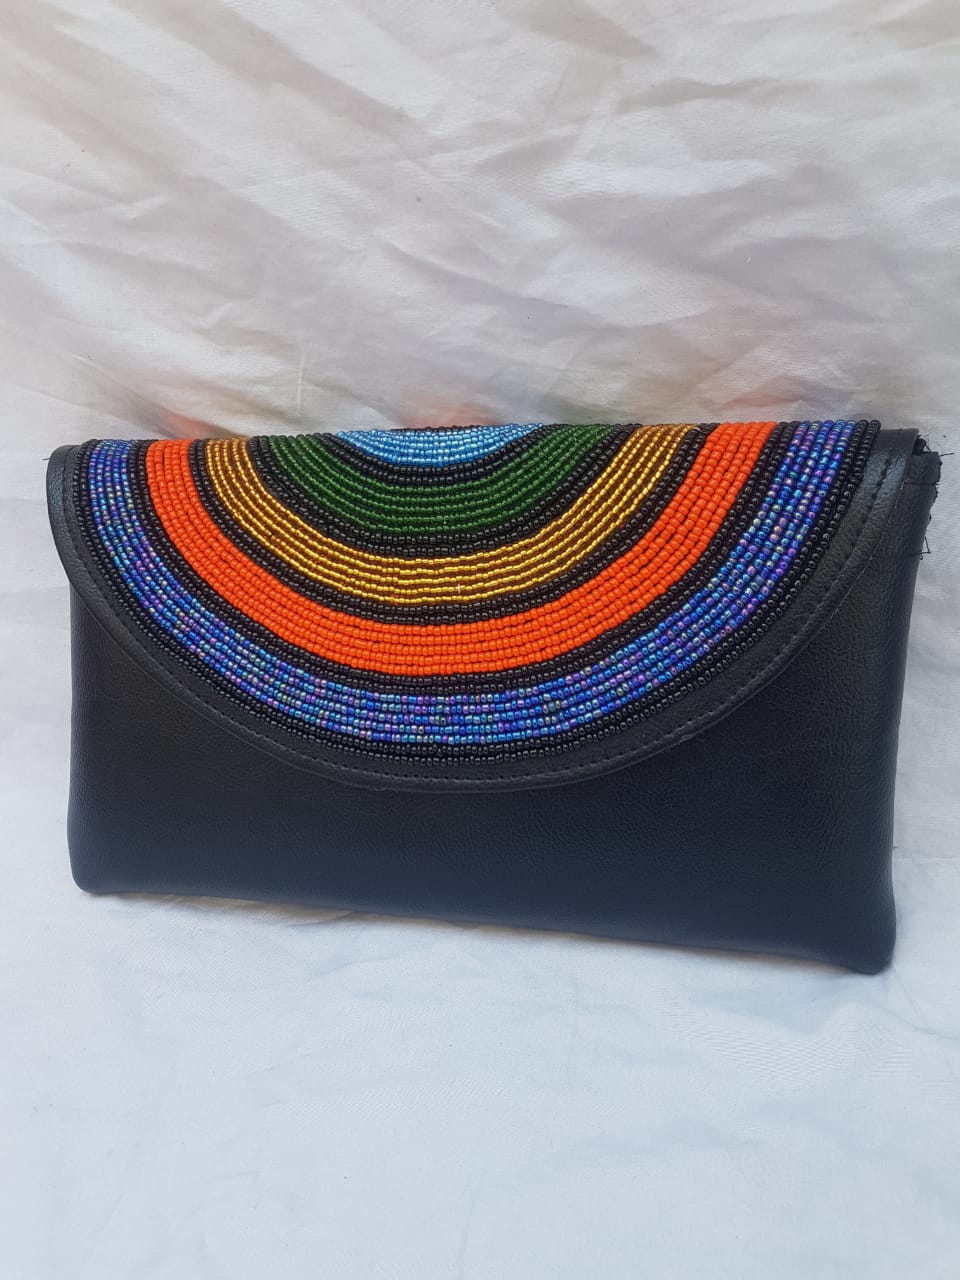 Amazon.com: BYKOINE Women Genuine Leather Shoulder Purse Multicolored  Spliced Handbag 3D Color Word Patchwork Shopper Crossbody Satchel :  Clothing, Shoes & Jewelry